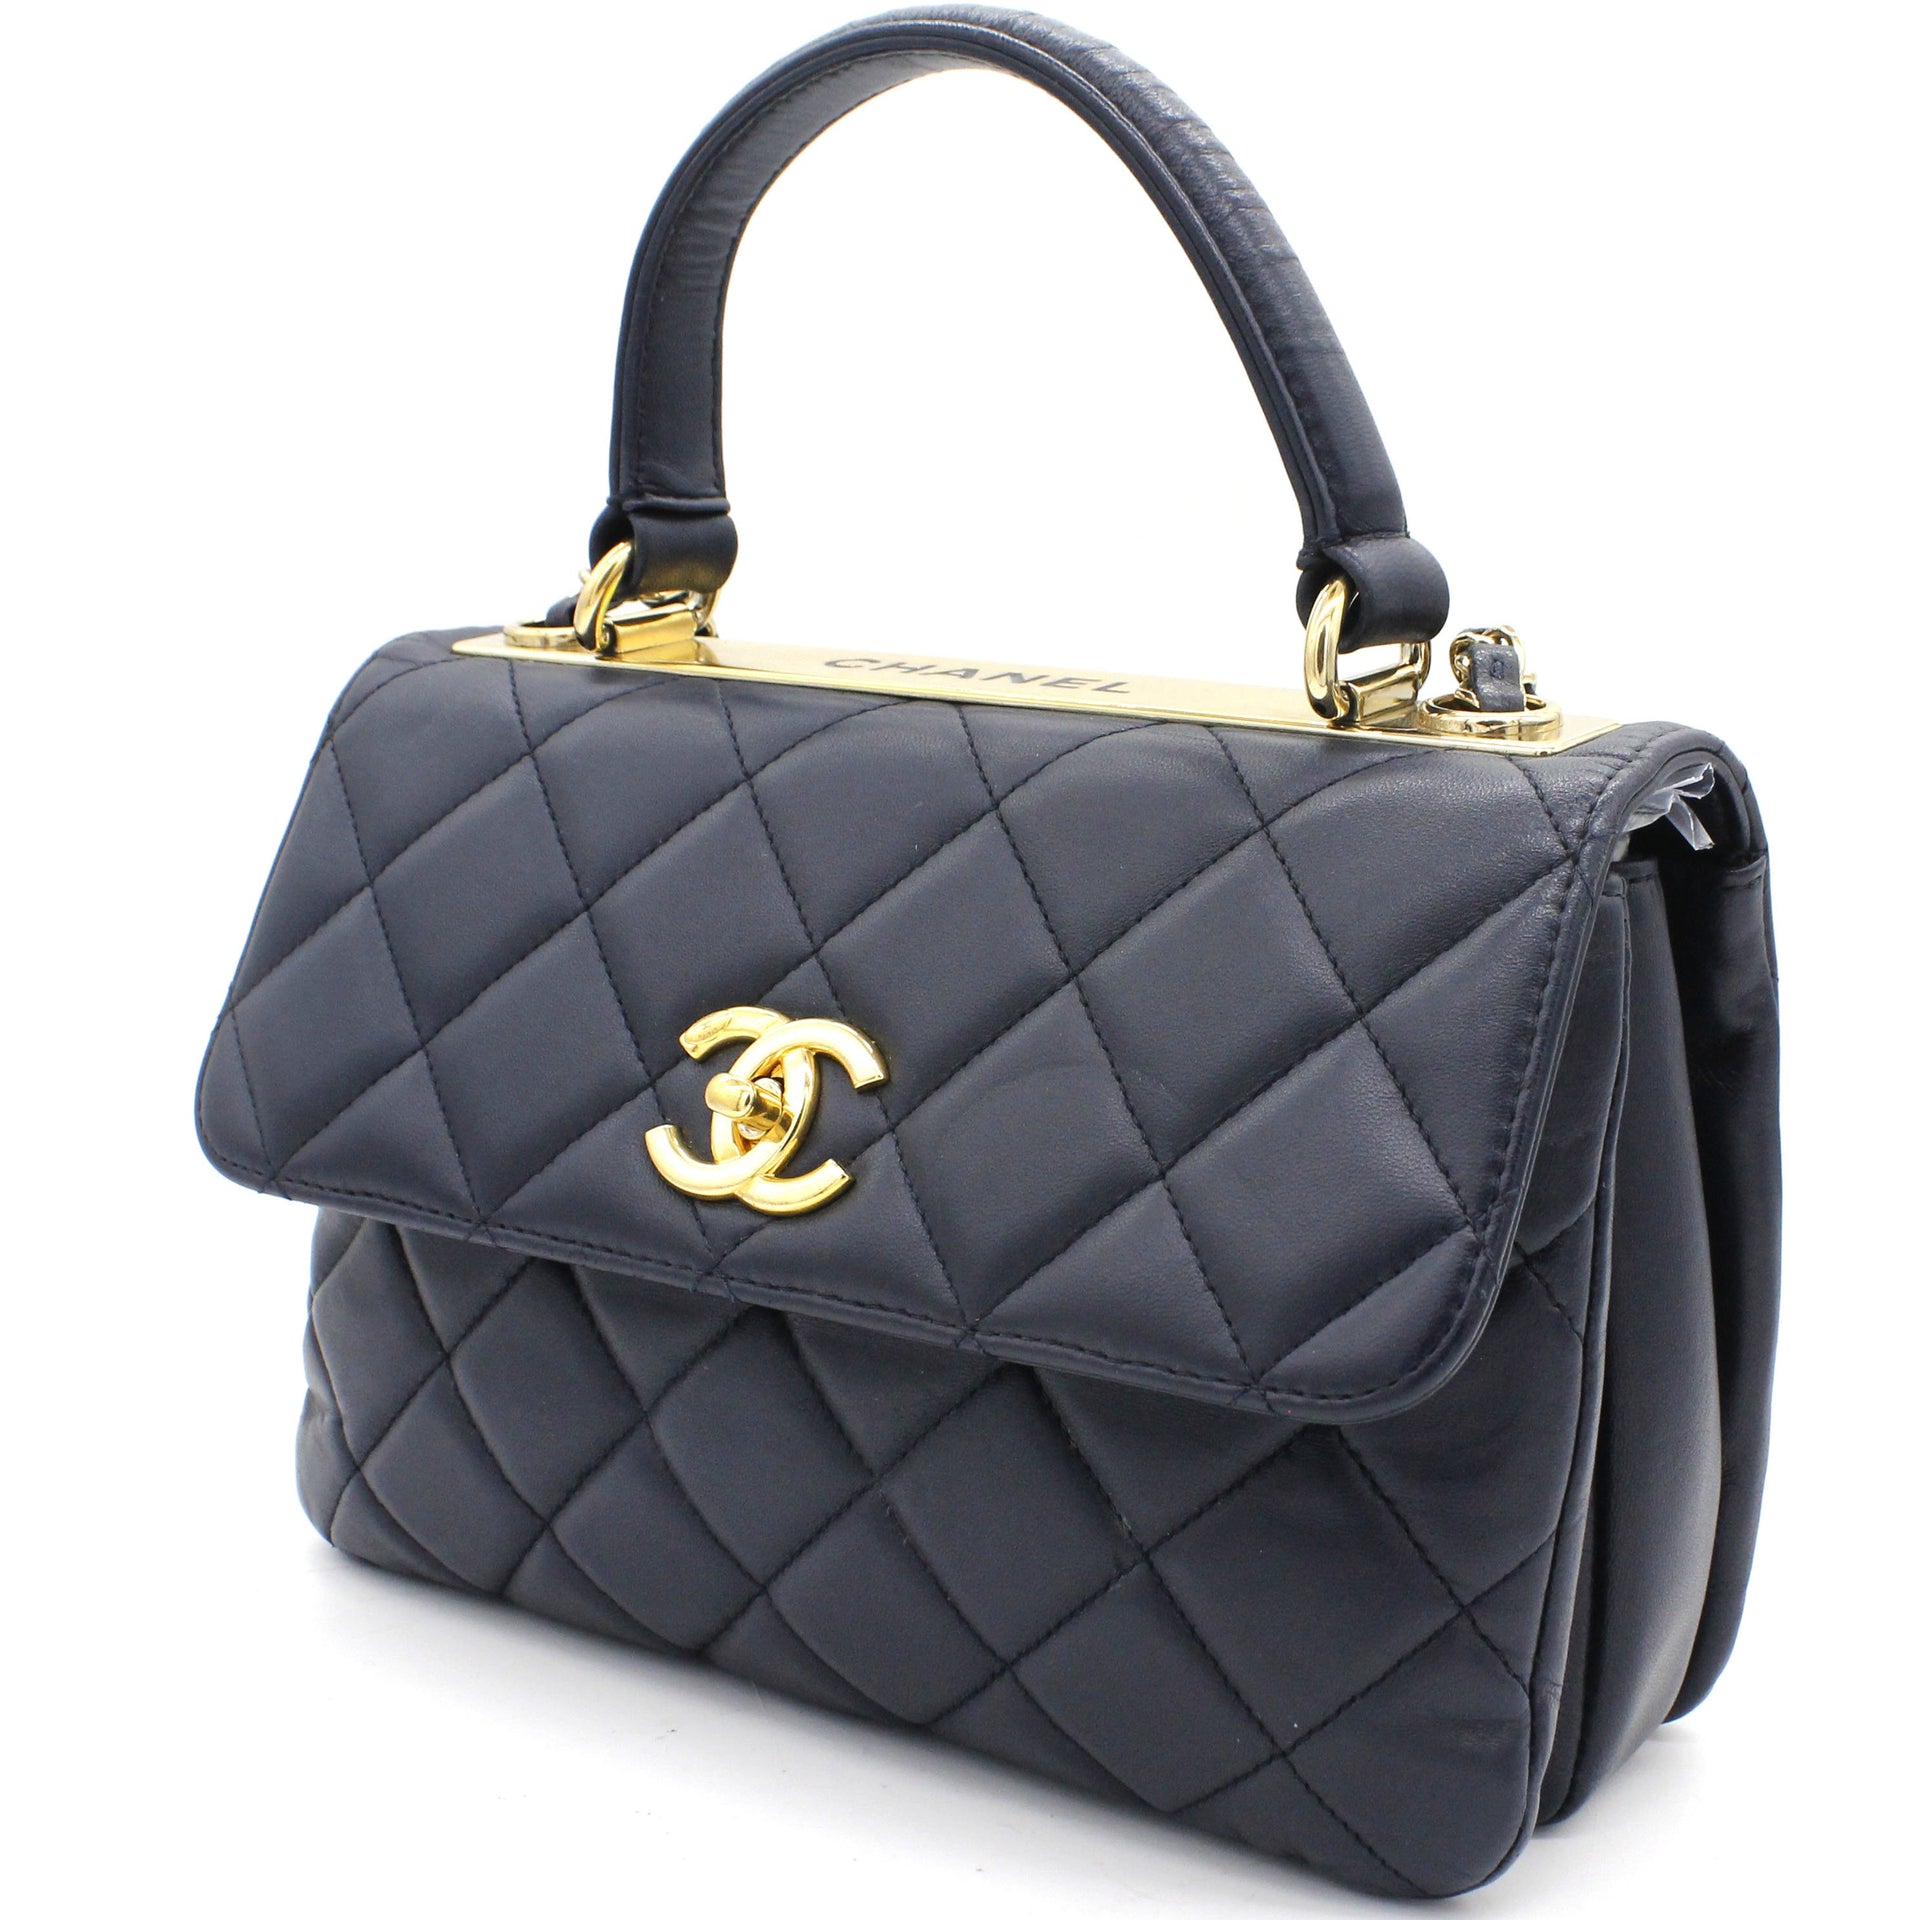 Chanel Vintage Diamond CC Camera Bag Quilted Leather Medium | eBay